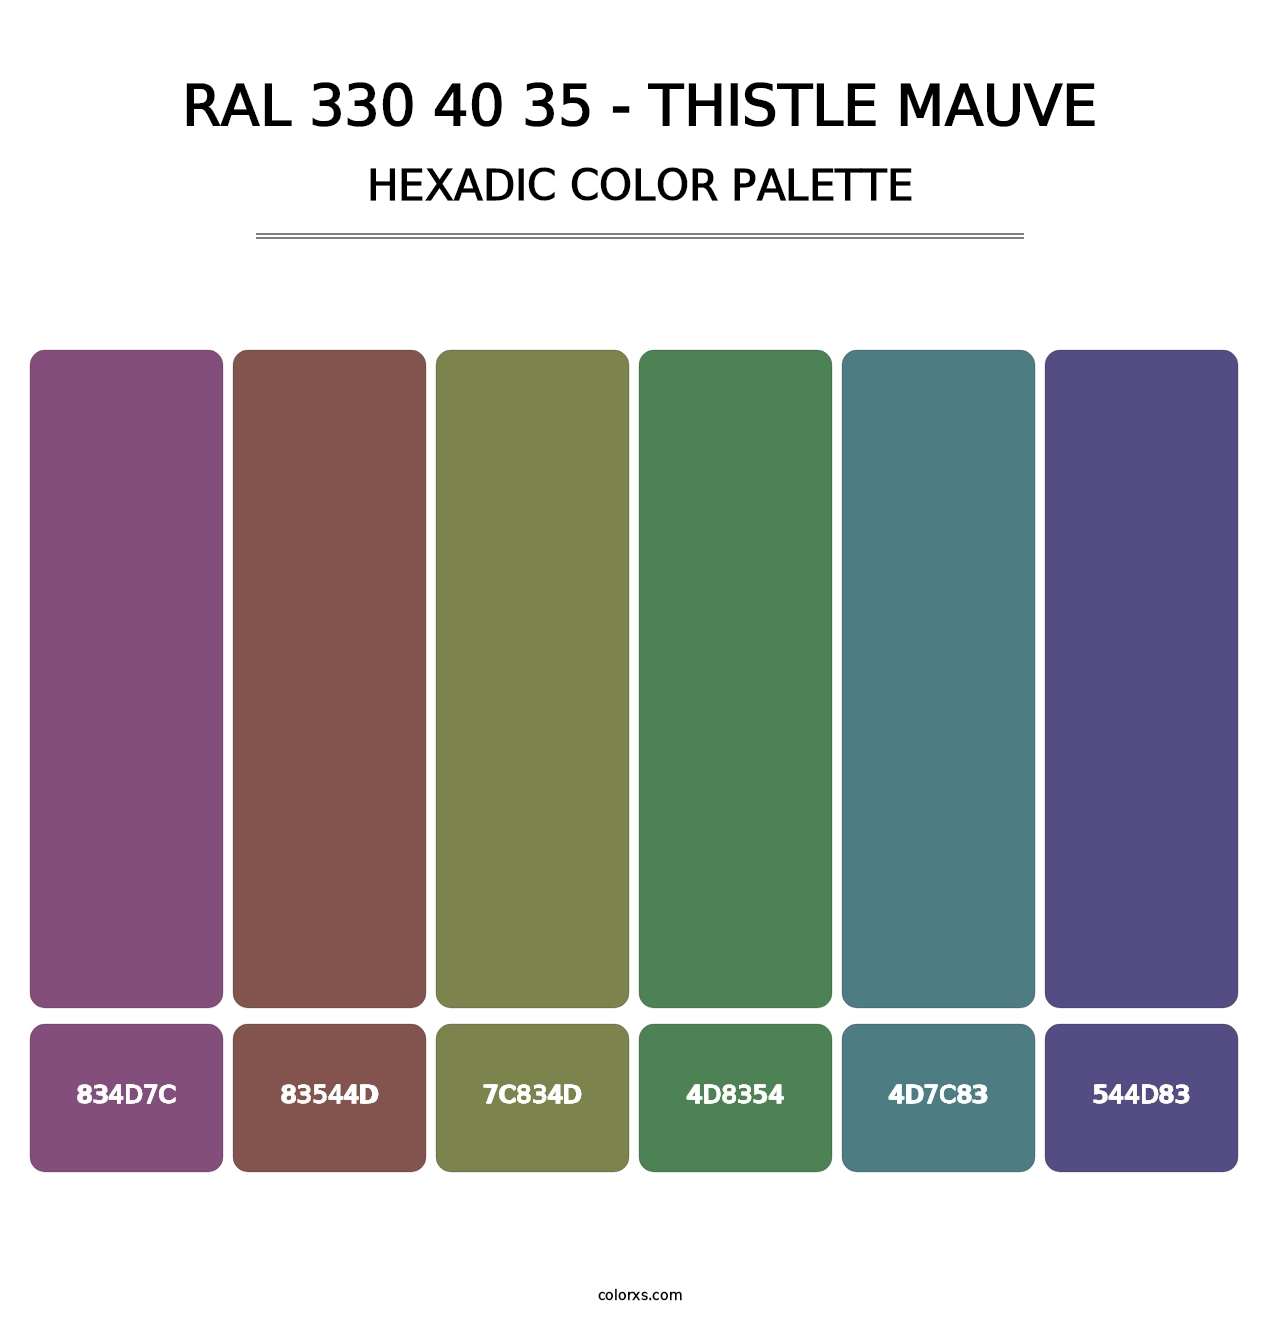 RAL 330 40 35 - Thistle Mauve - Hexadic Color Palette